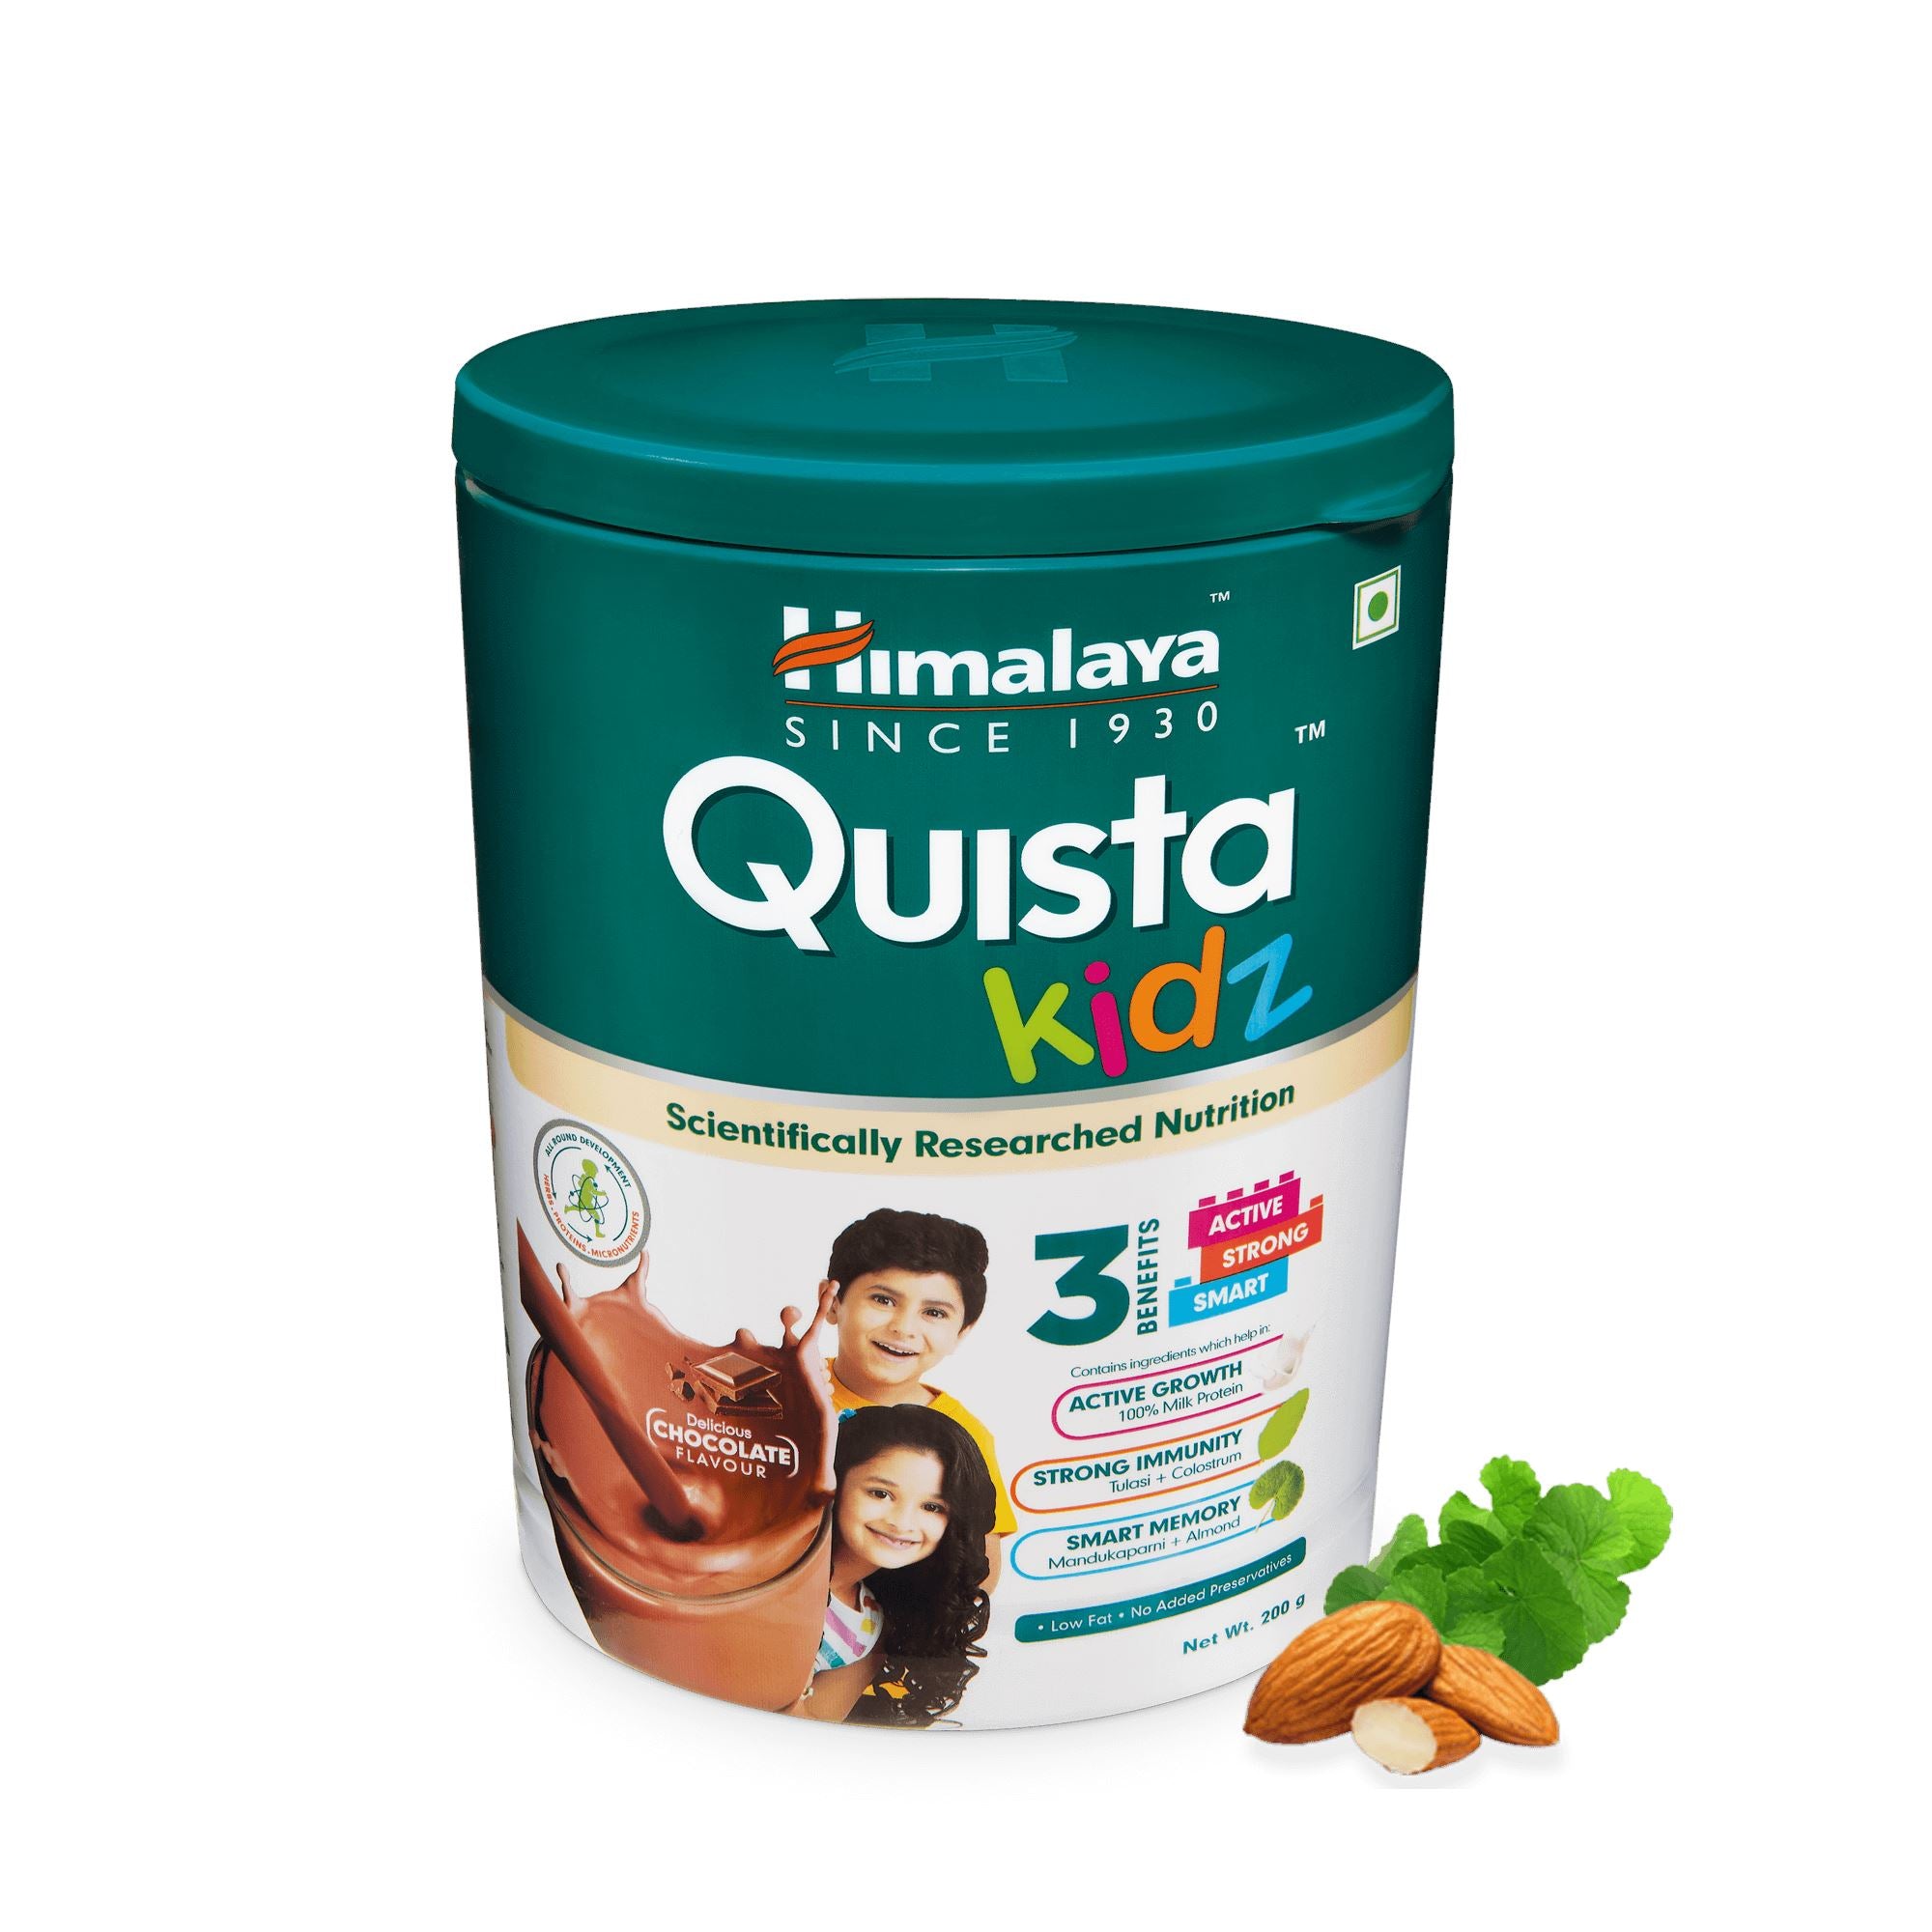 Himalaya Quista kidz - Nutrition drink for kids